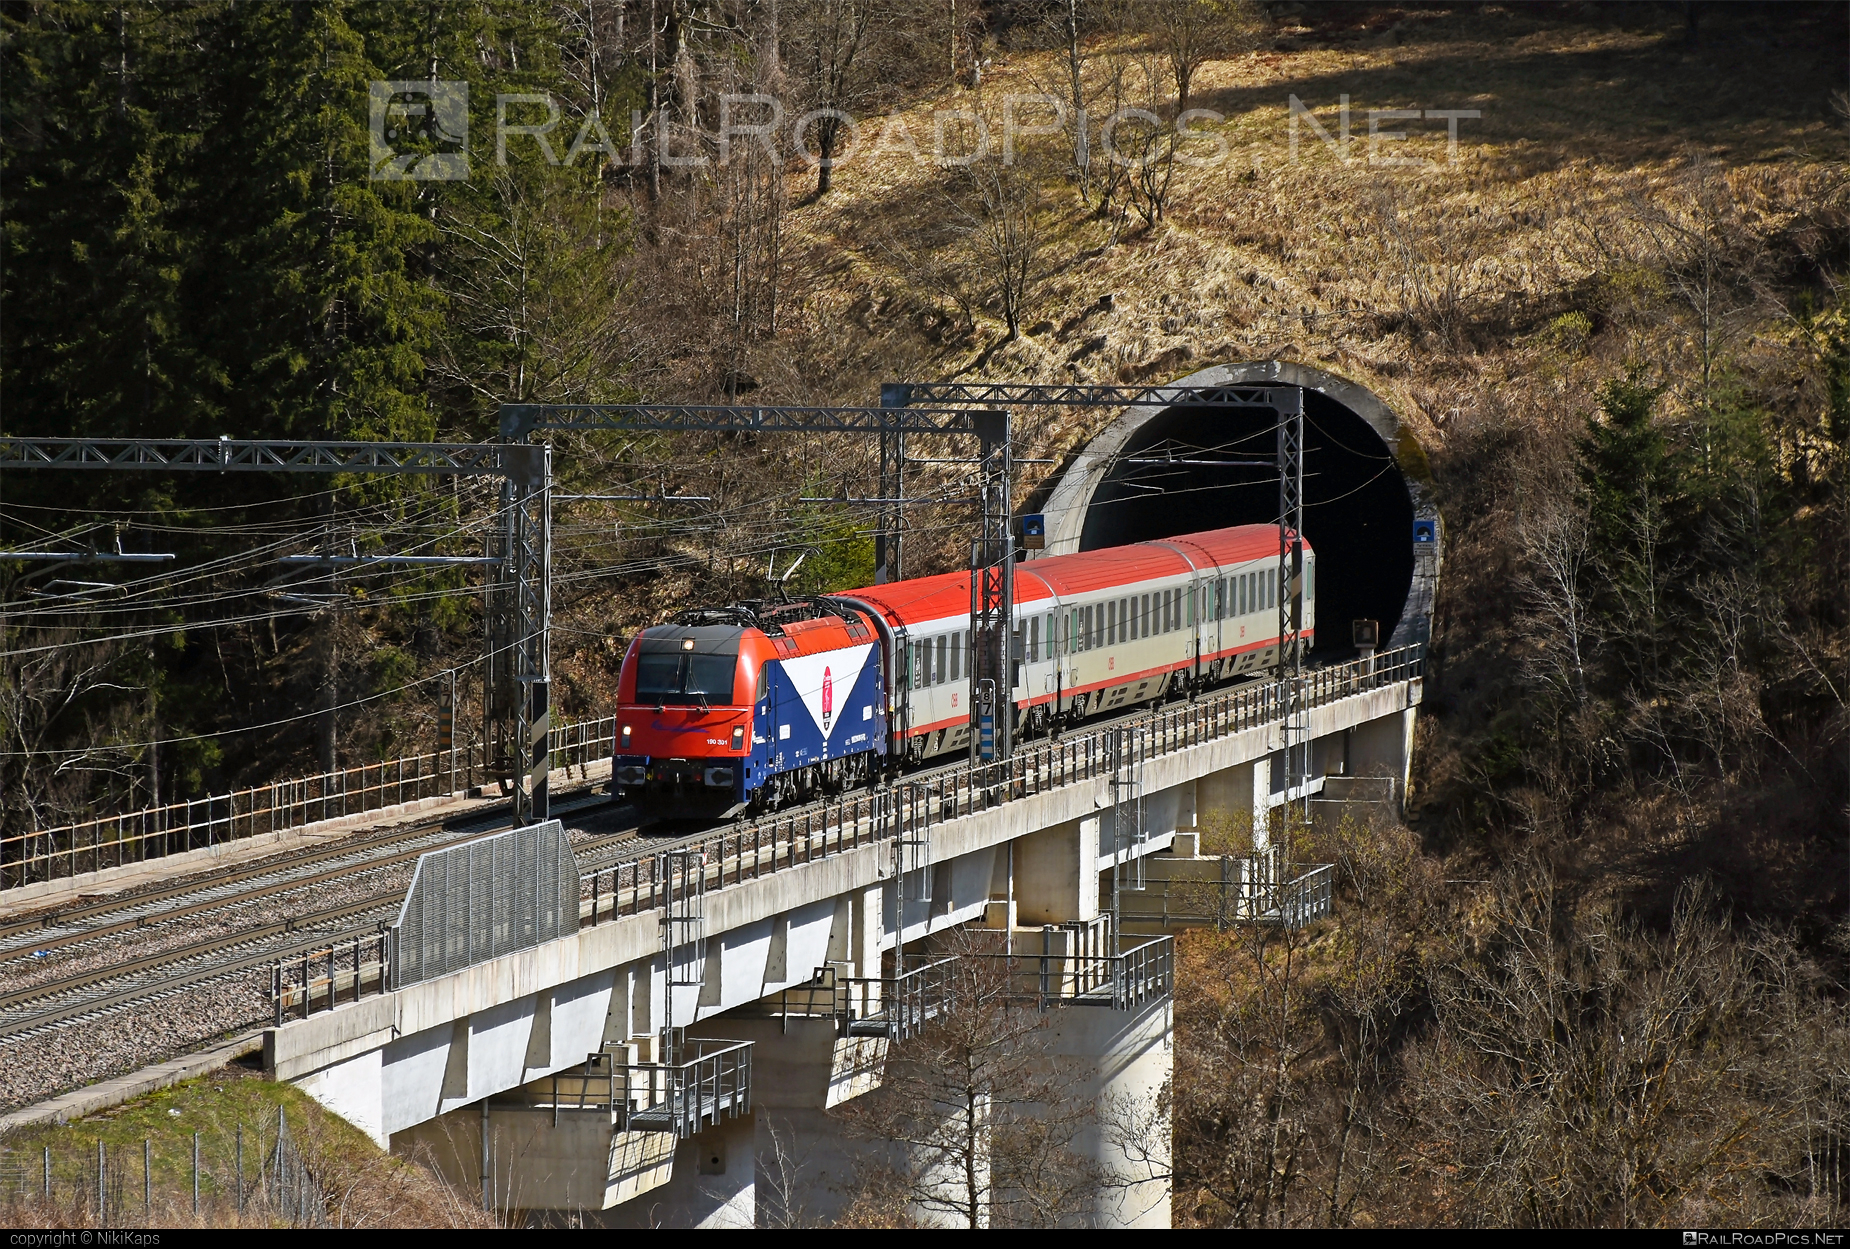 Siemens ES 64 U4 - 190 301 operated by Società Ferrovie Udine Cividale #bridge #es64 #es64u4 #eurosprinter #fuc #micotra #siemens #siemensEs64 #siemensEs64u4 #siemenstaurus #taurus #tauruslocomotive #tunnel